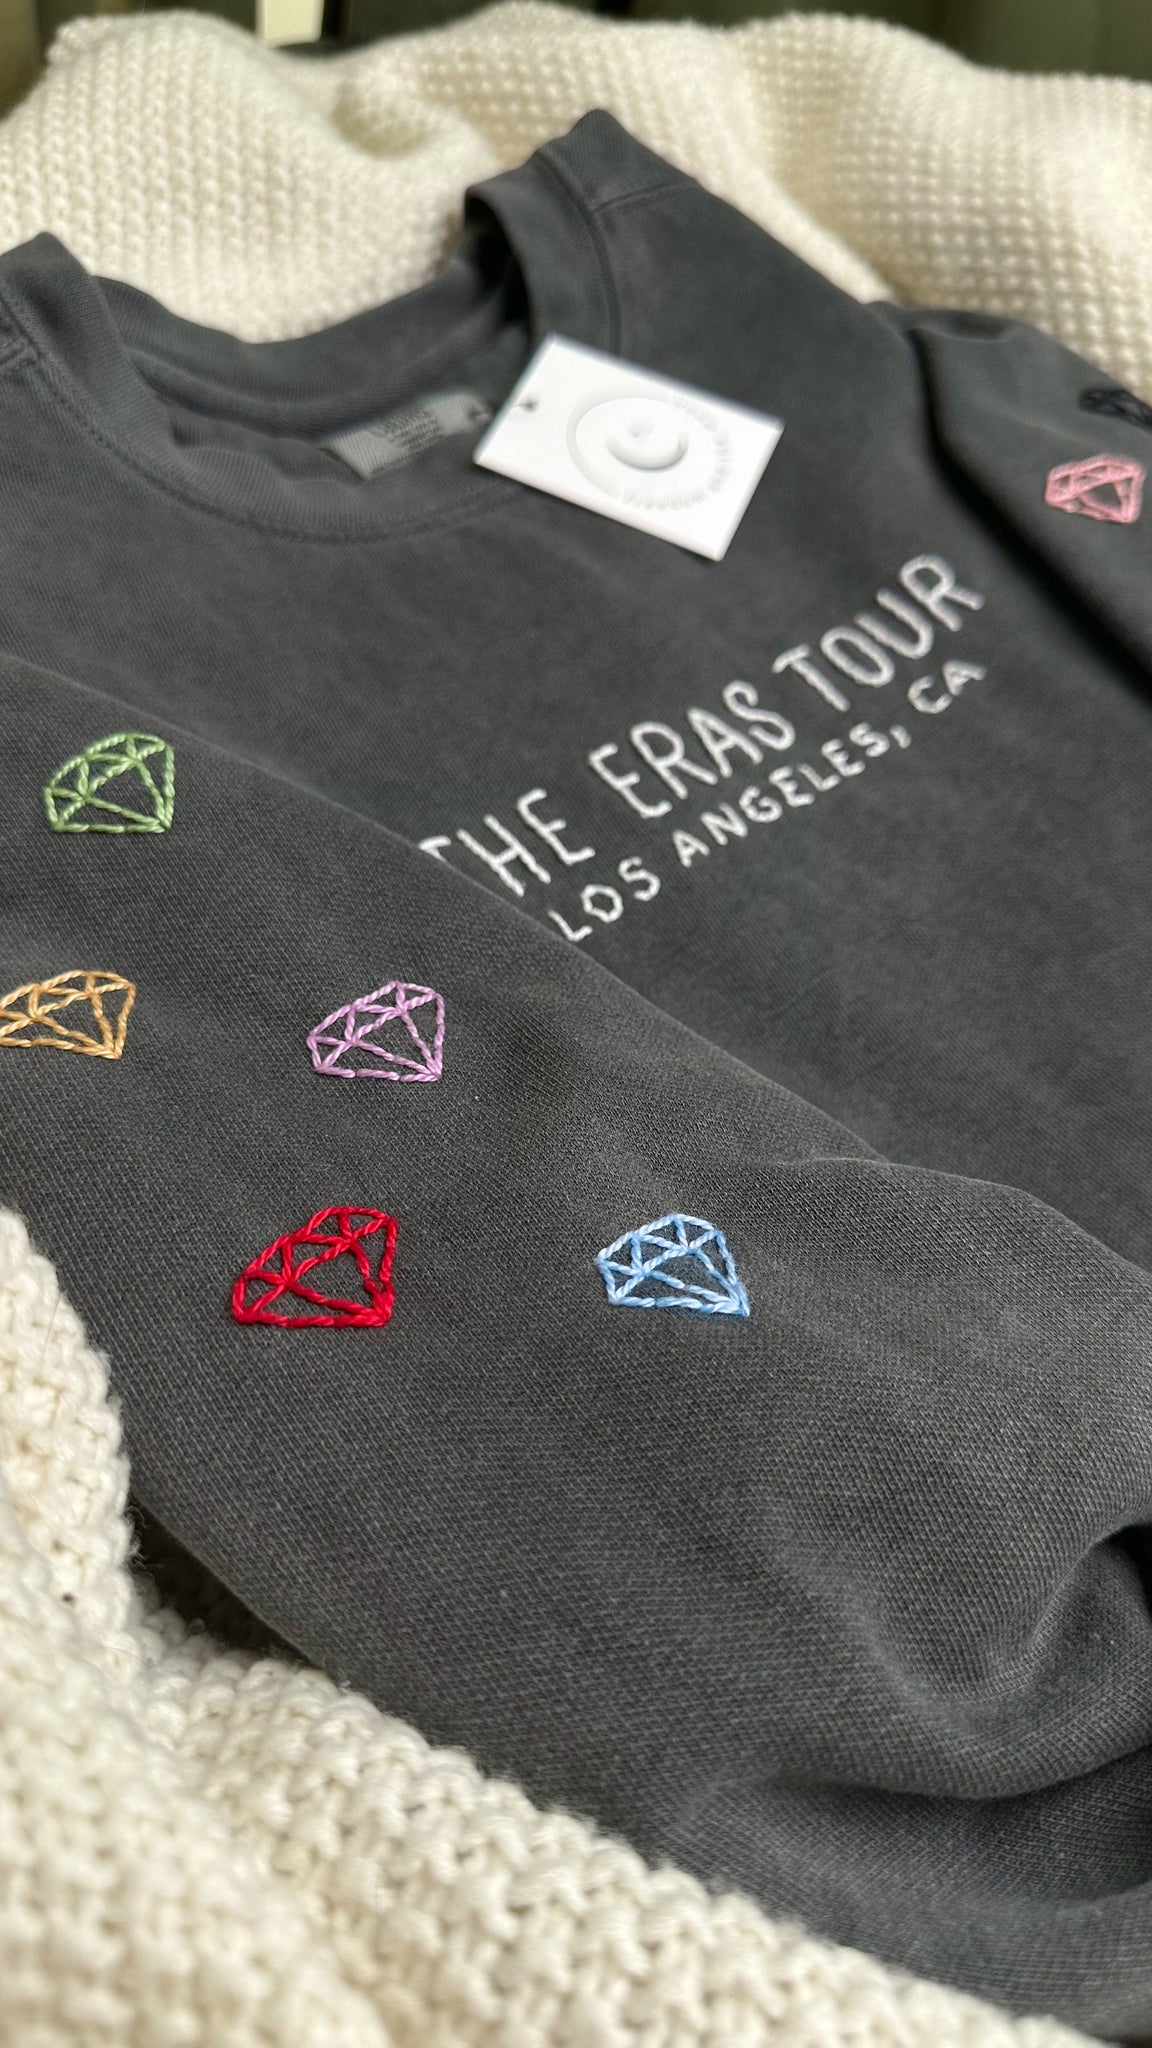 Hand Stitched The Eras Tour Embroidered Sweatshirt